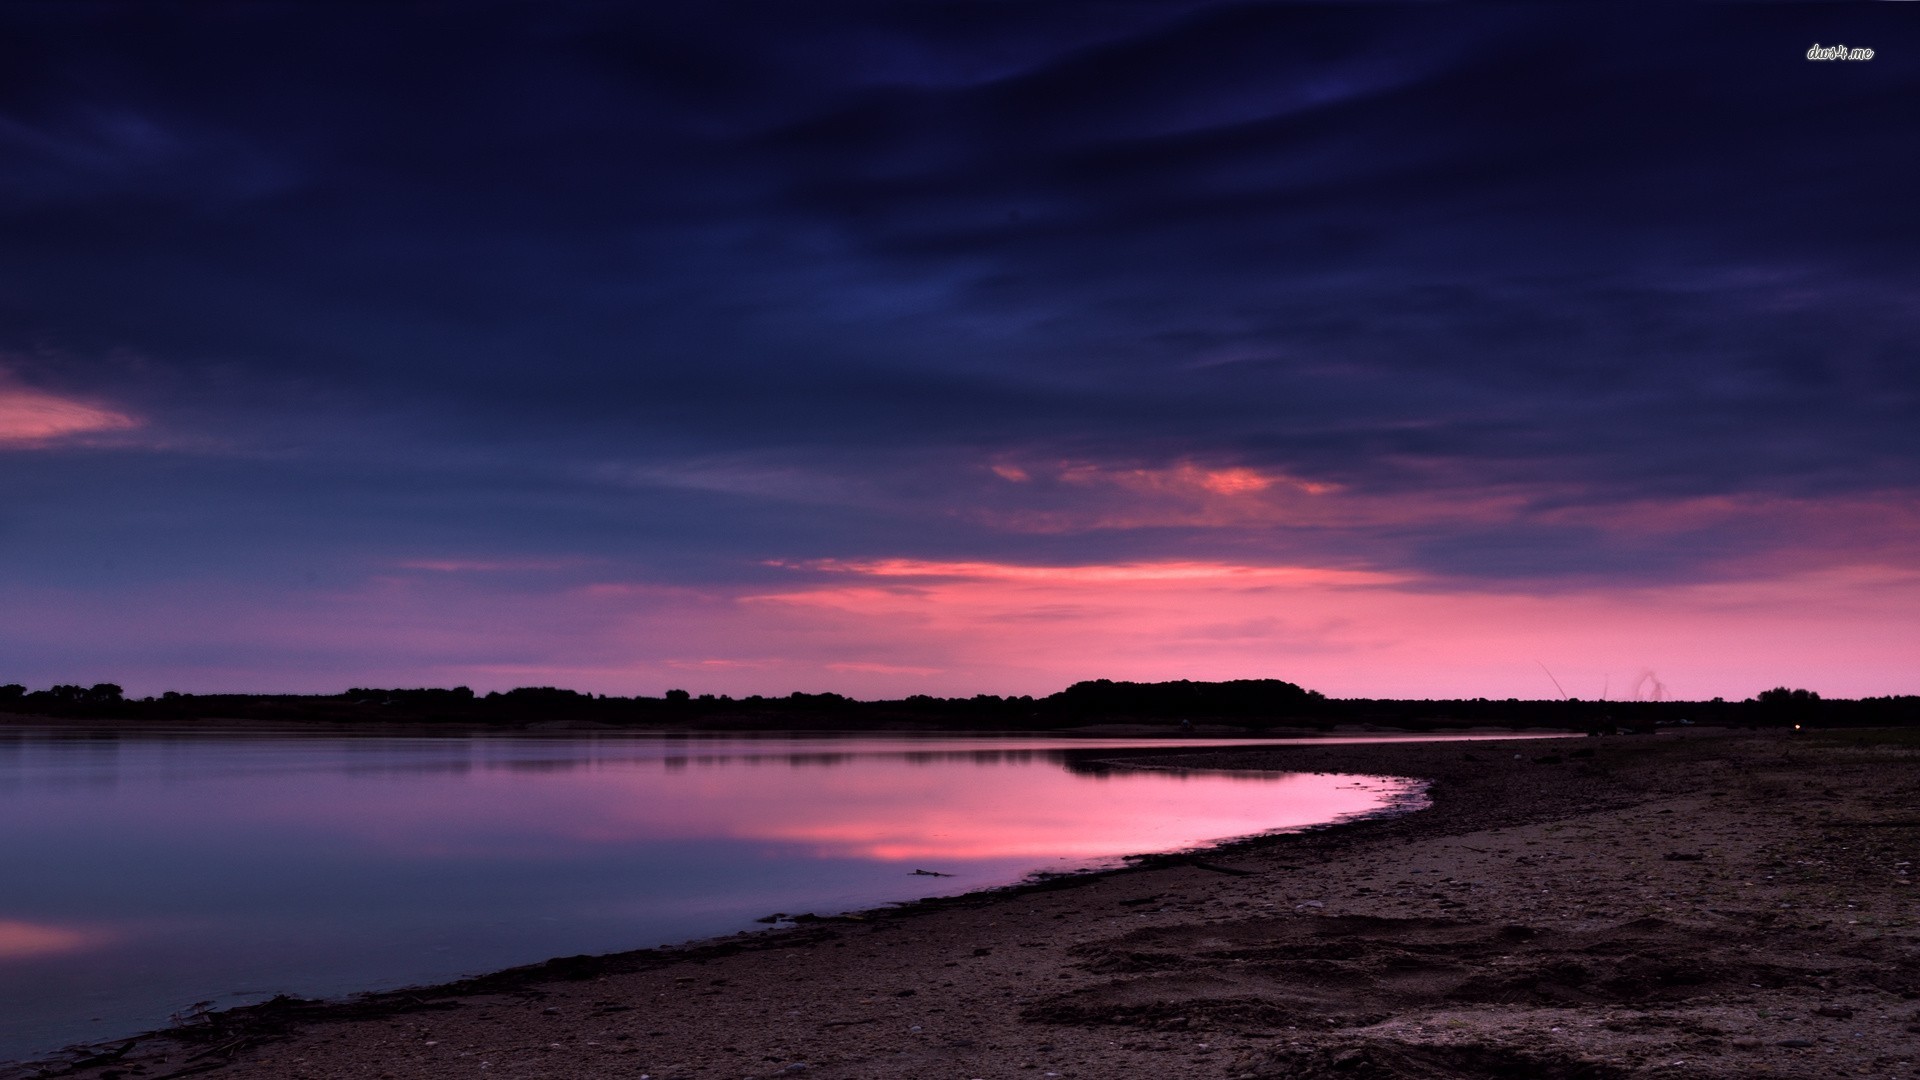 dusk at the beach image